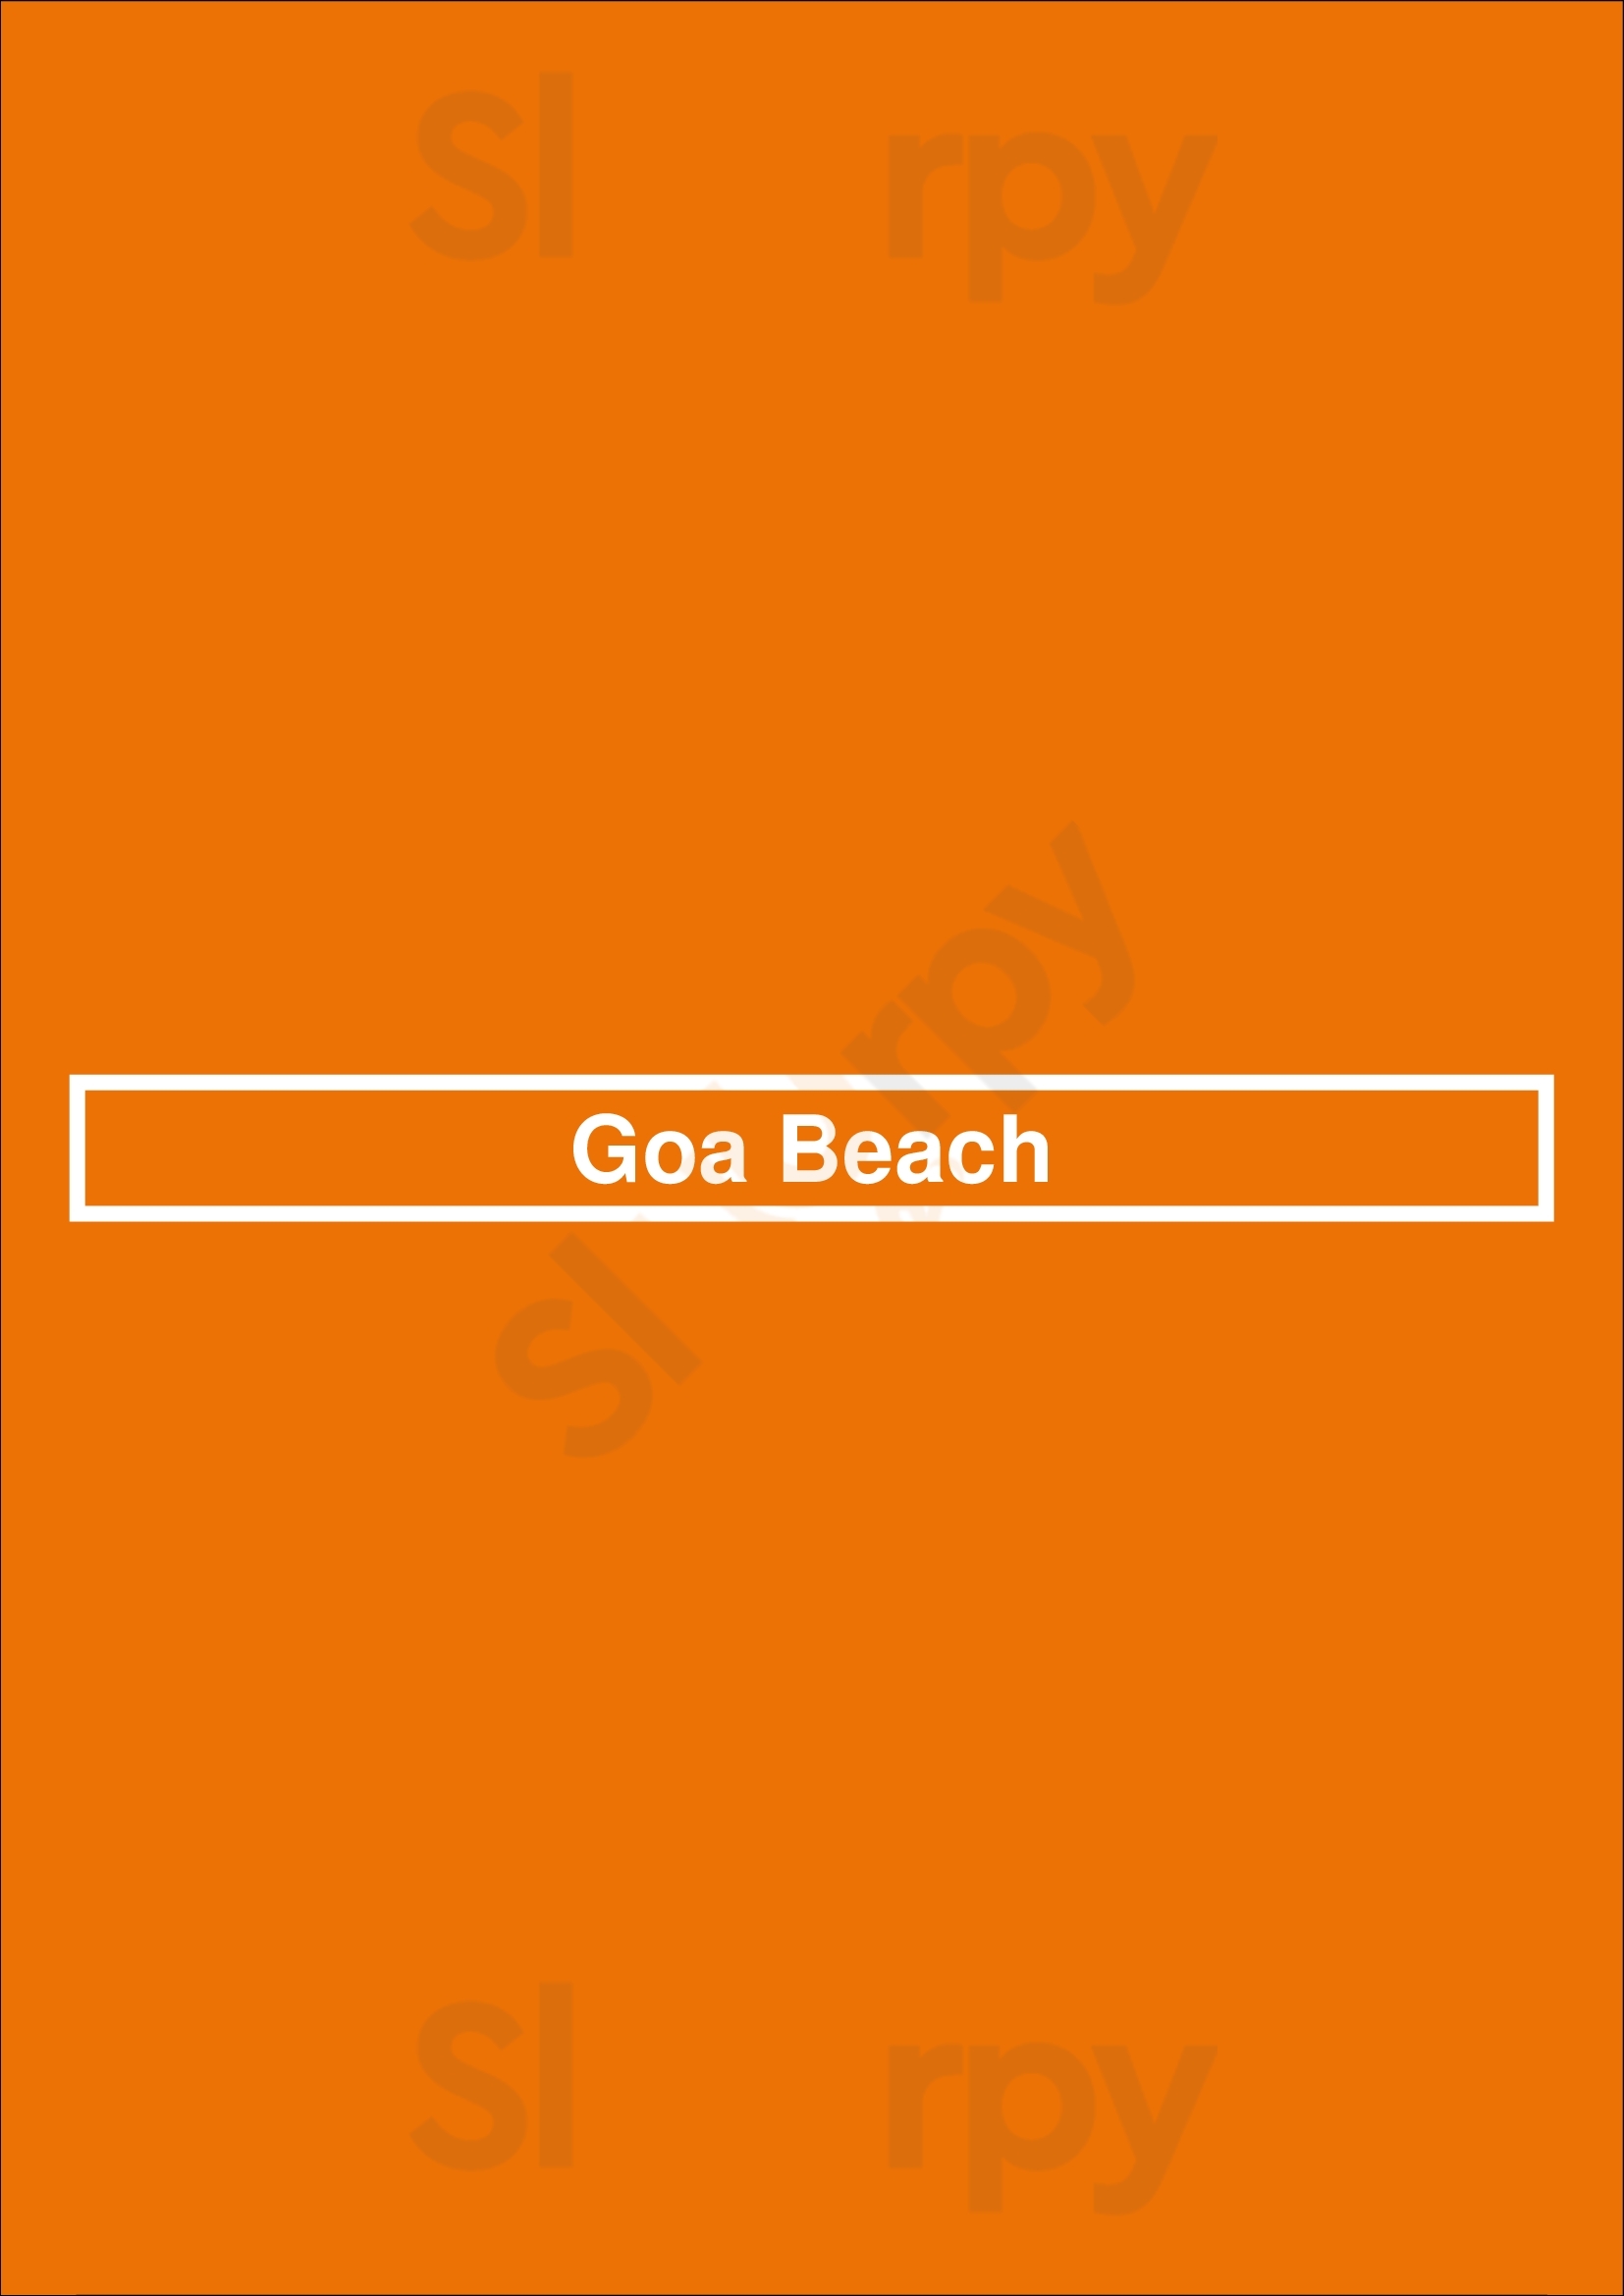 Goa Beach Paris Menu - 1